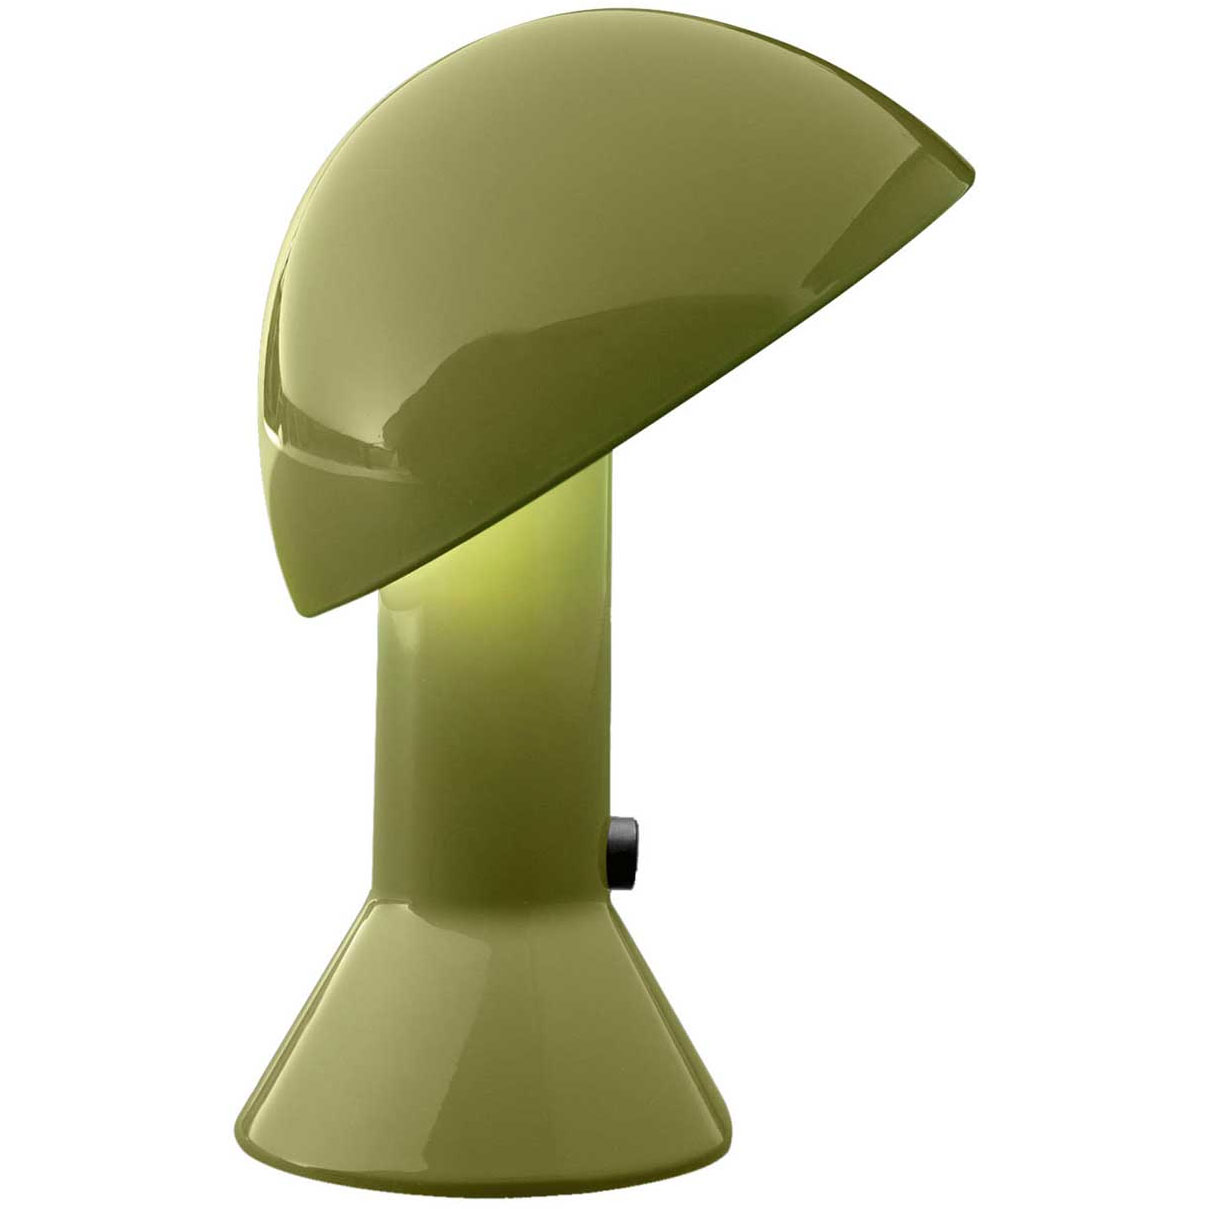 Elmetto Table Lamp, Green